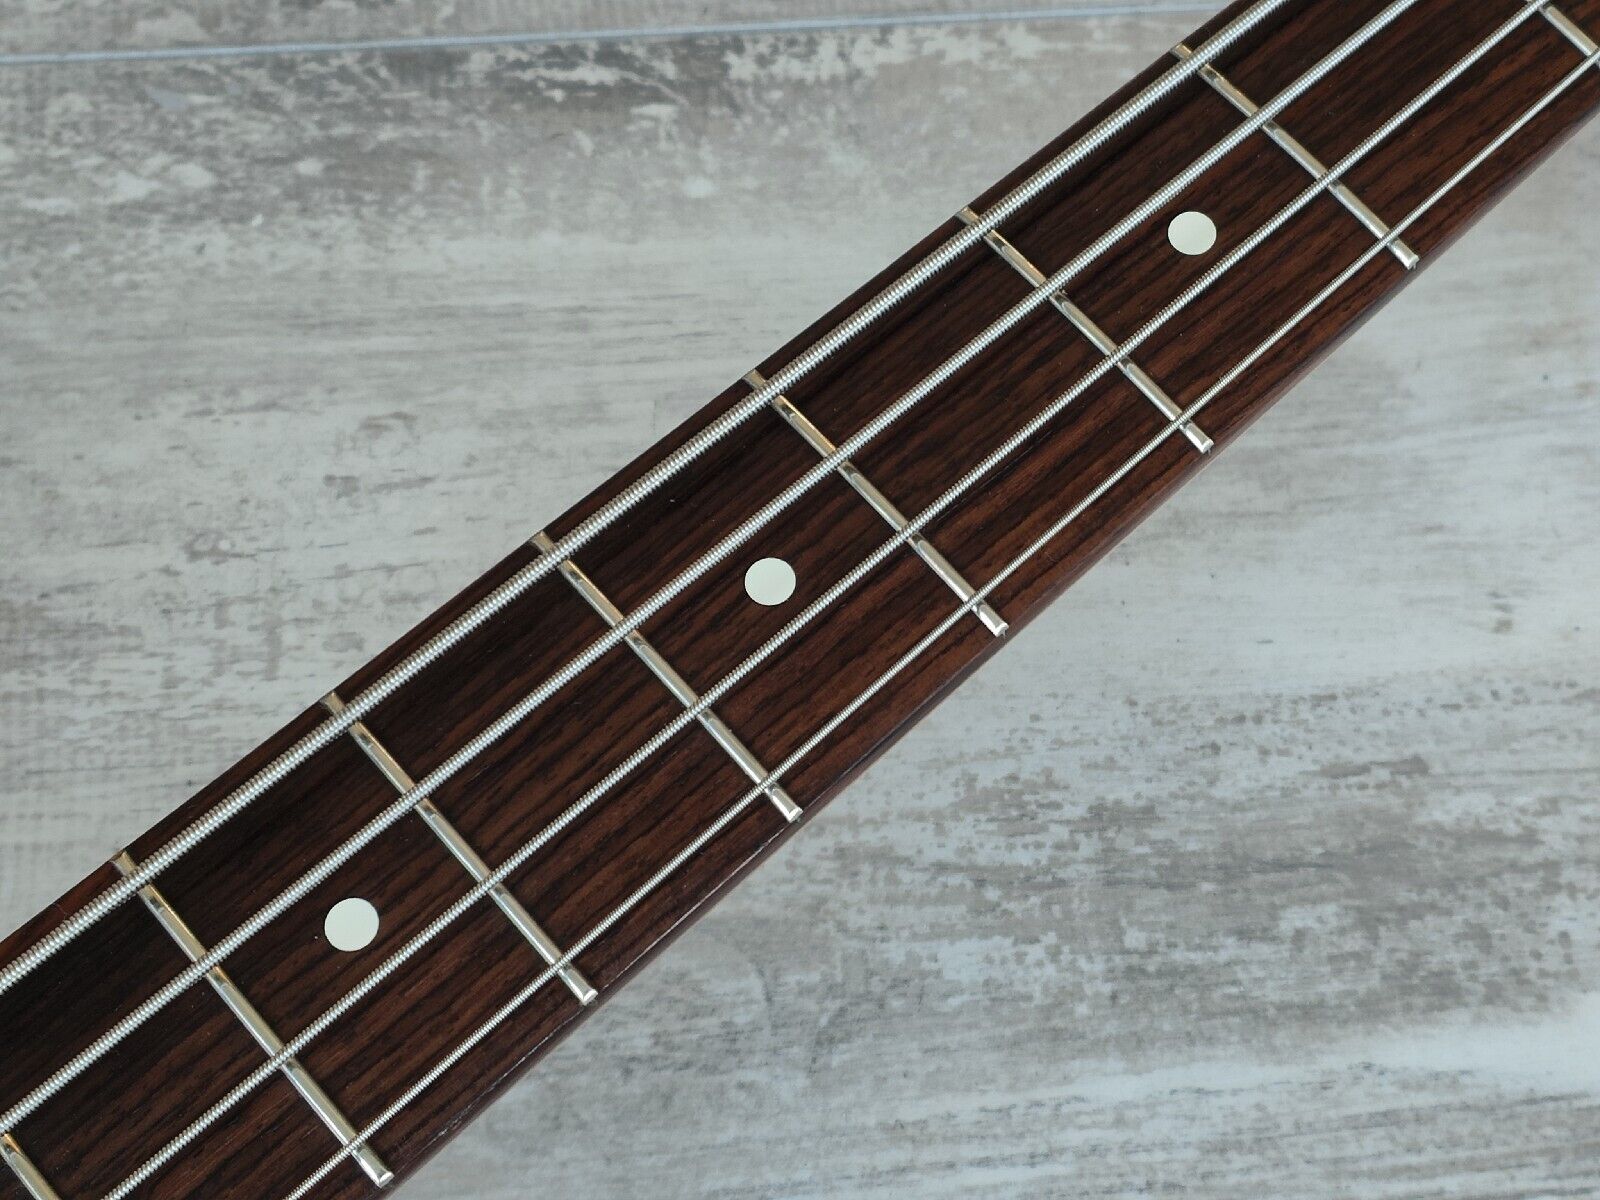 2005 Fender Classic Series '60's Jazz Bass (Sunburst)